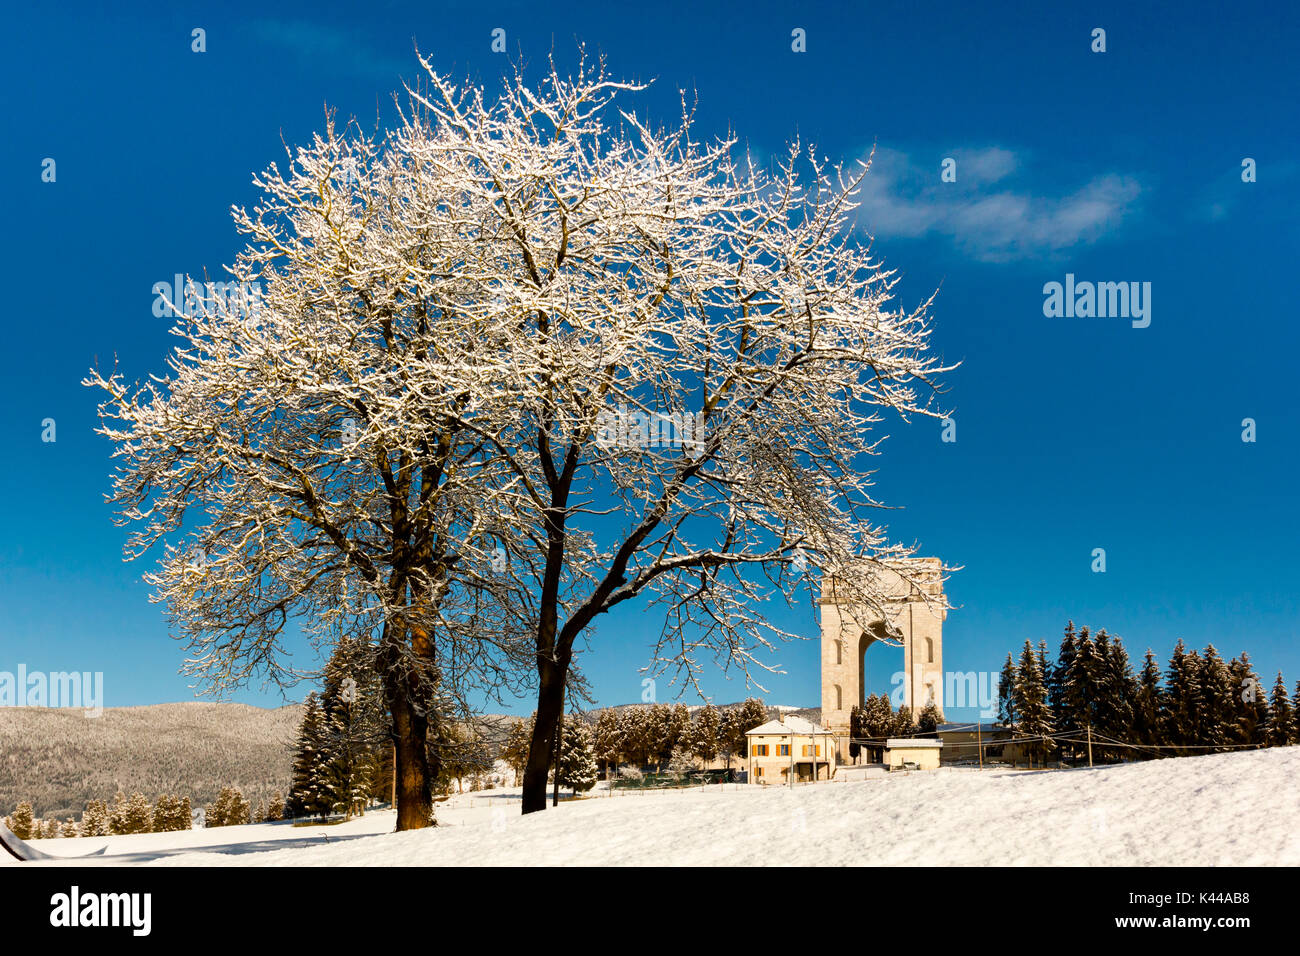 War memorial, Altopiano of Asiago, Province of Vicenza, Veneto, Italy. Military monument in winter landscape. Stock Photo